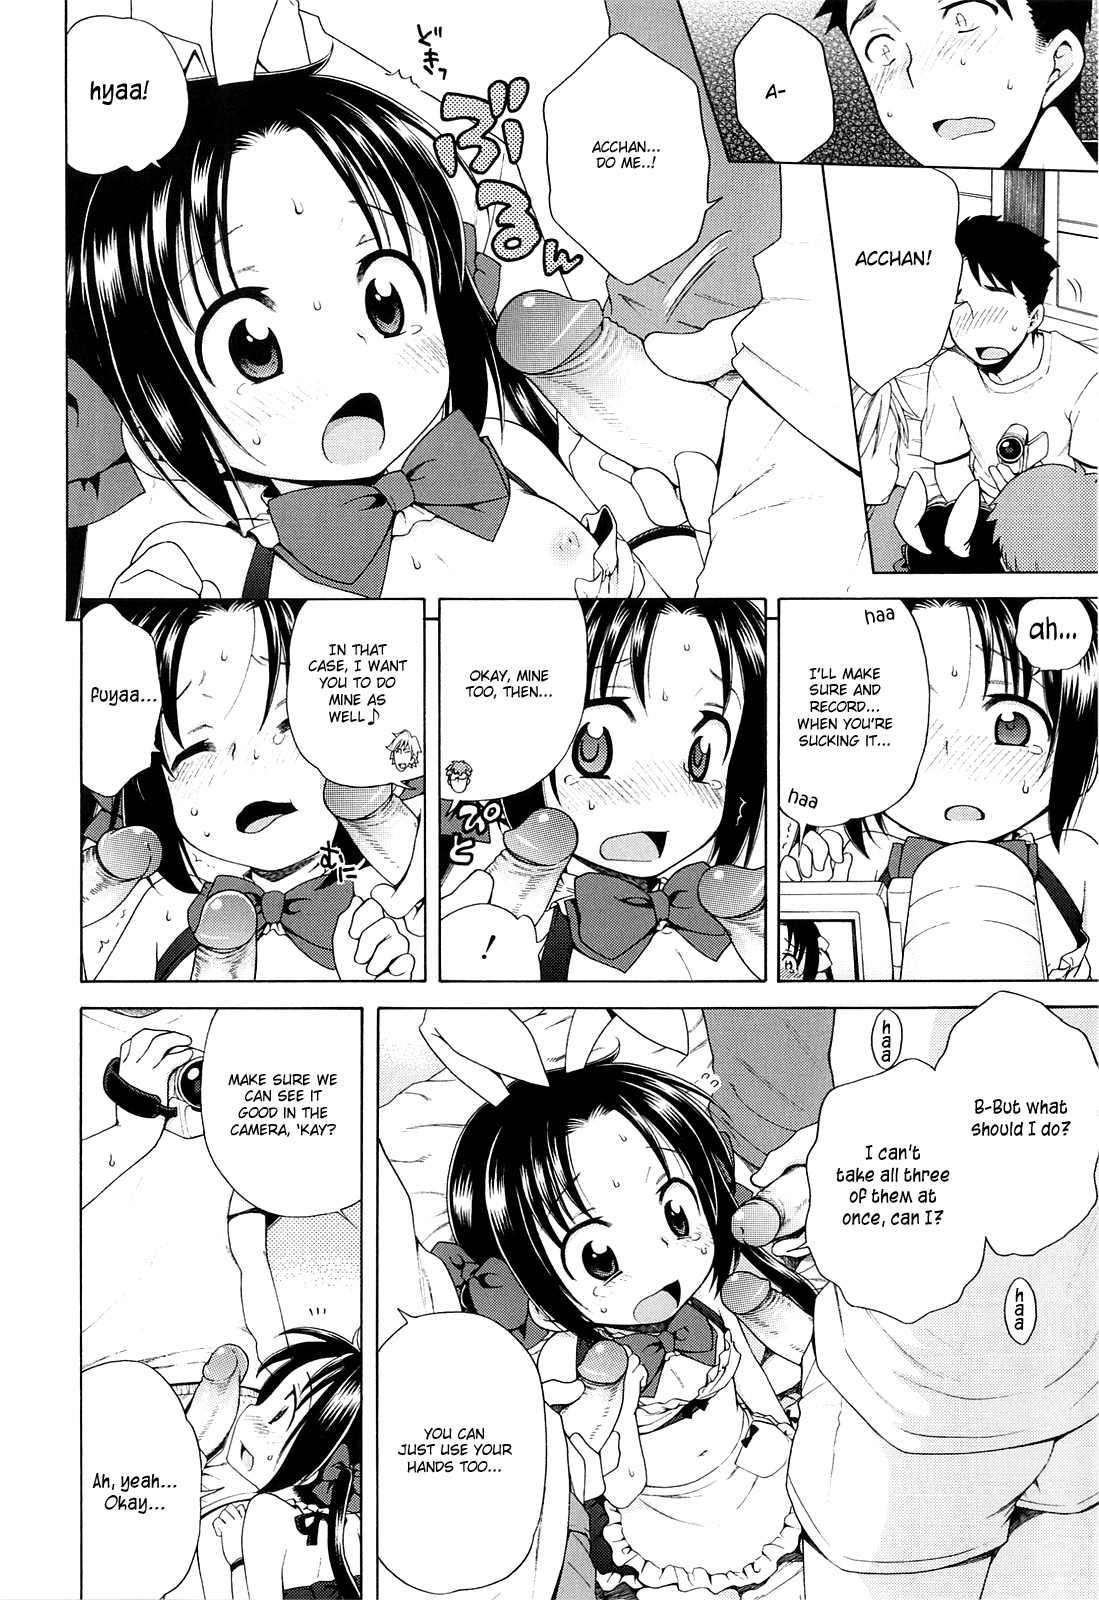 The Light of Tsukimi Manor 1-6 hentai manga picture 106